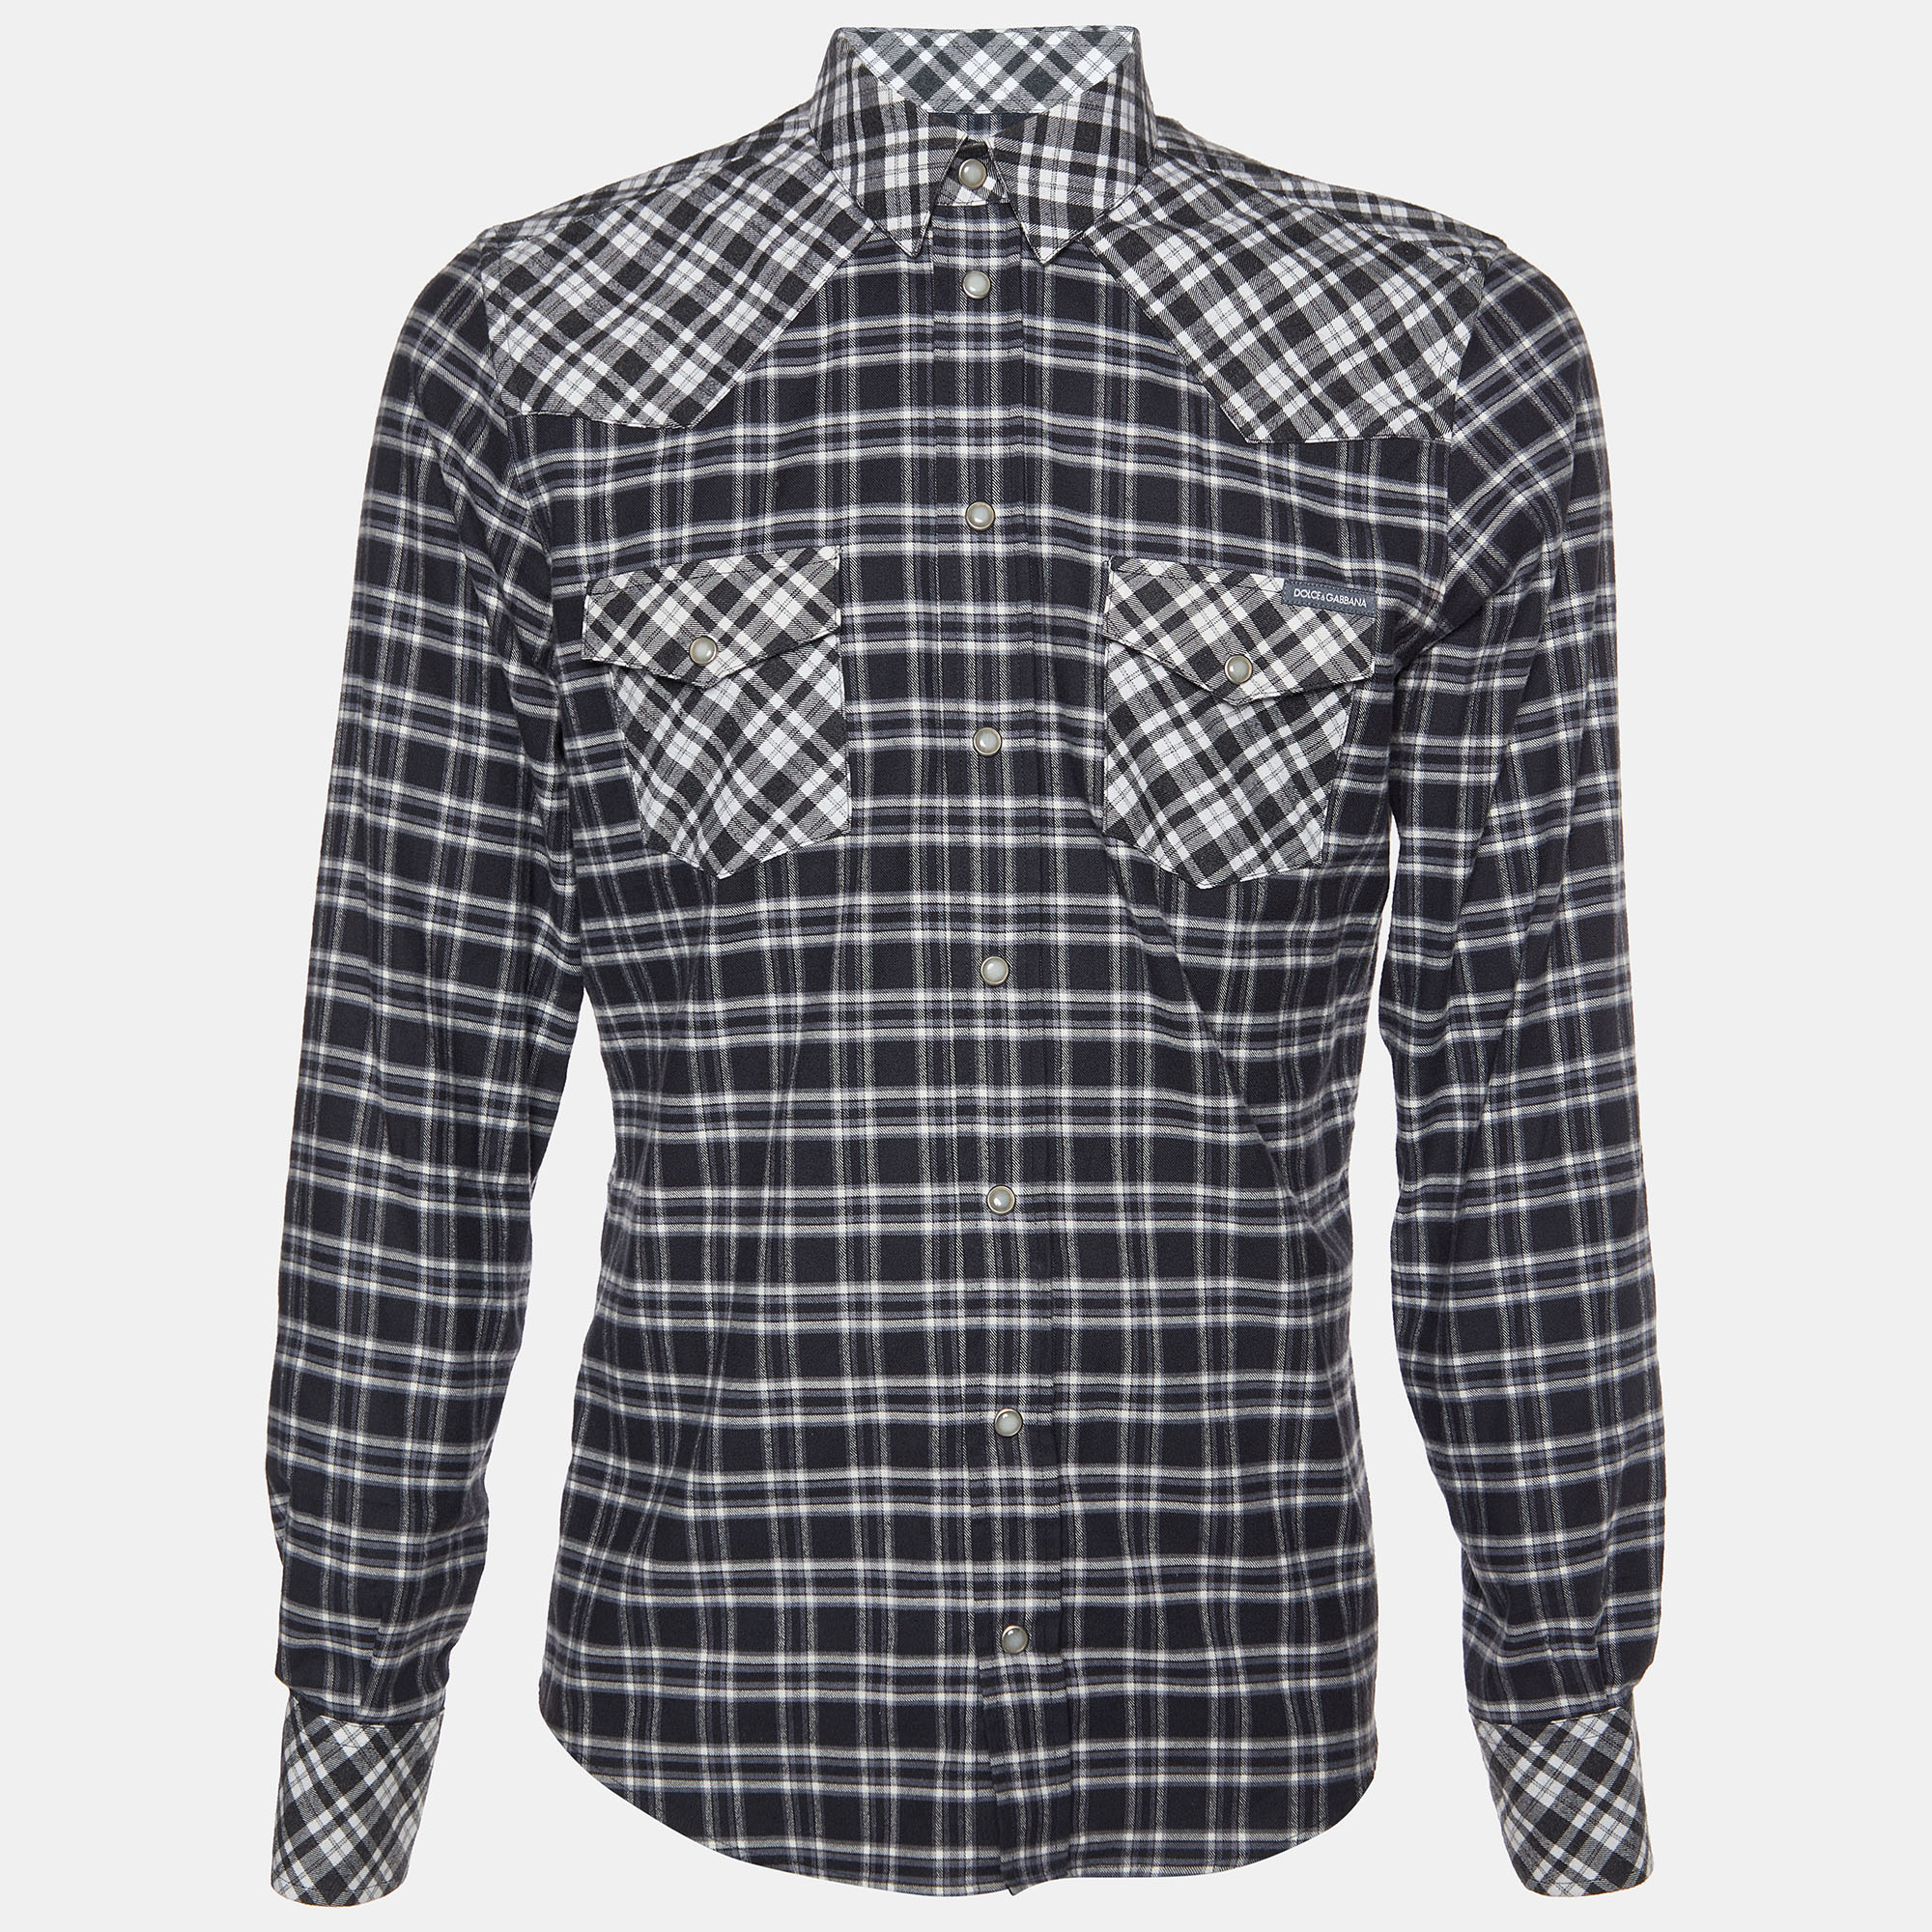 Dolce & gabbana charcoal grey plaid check cotton long sleeve shirt m